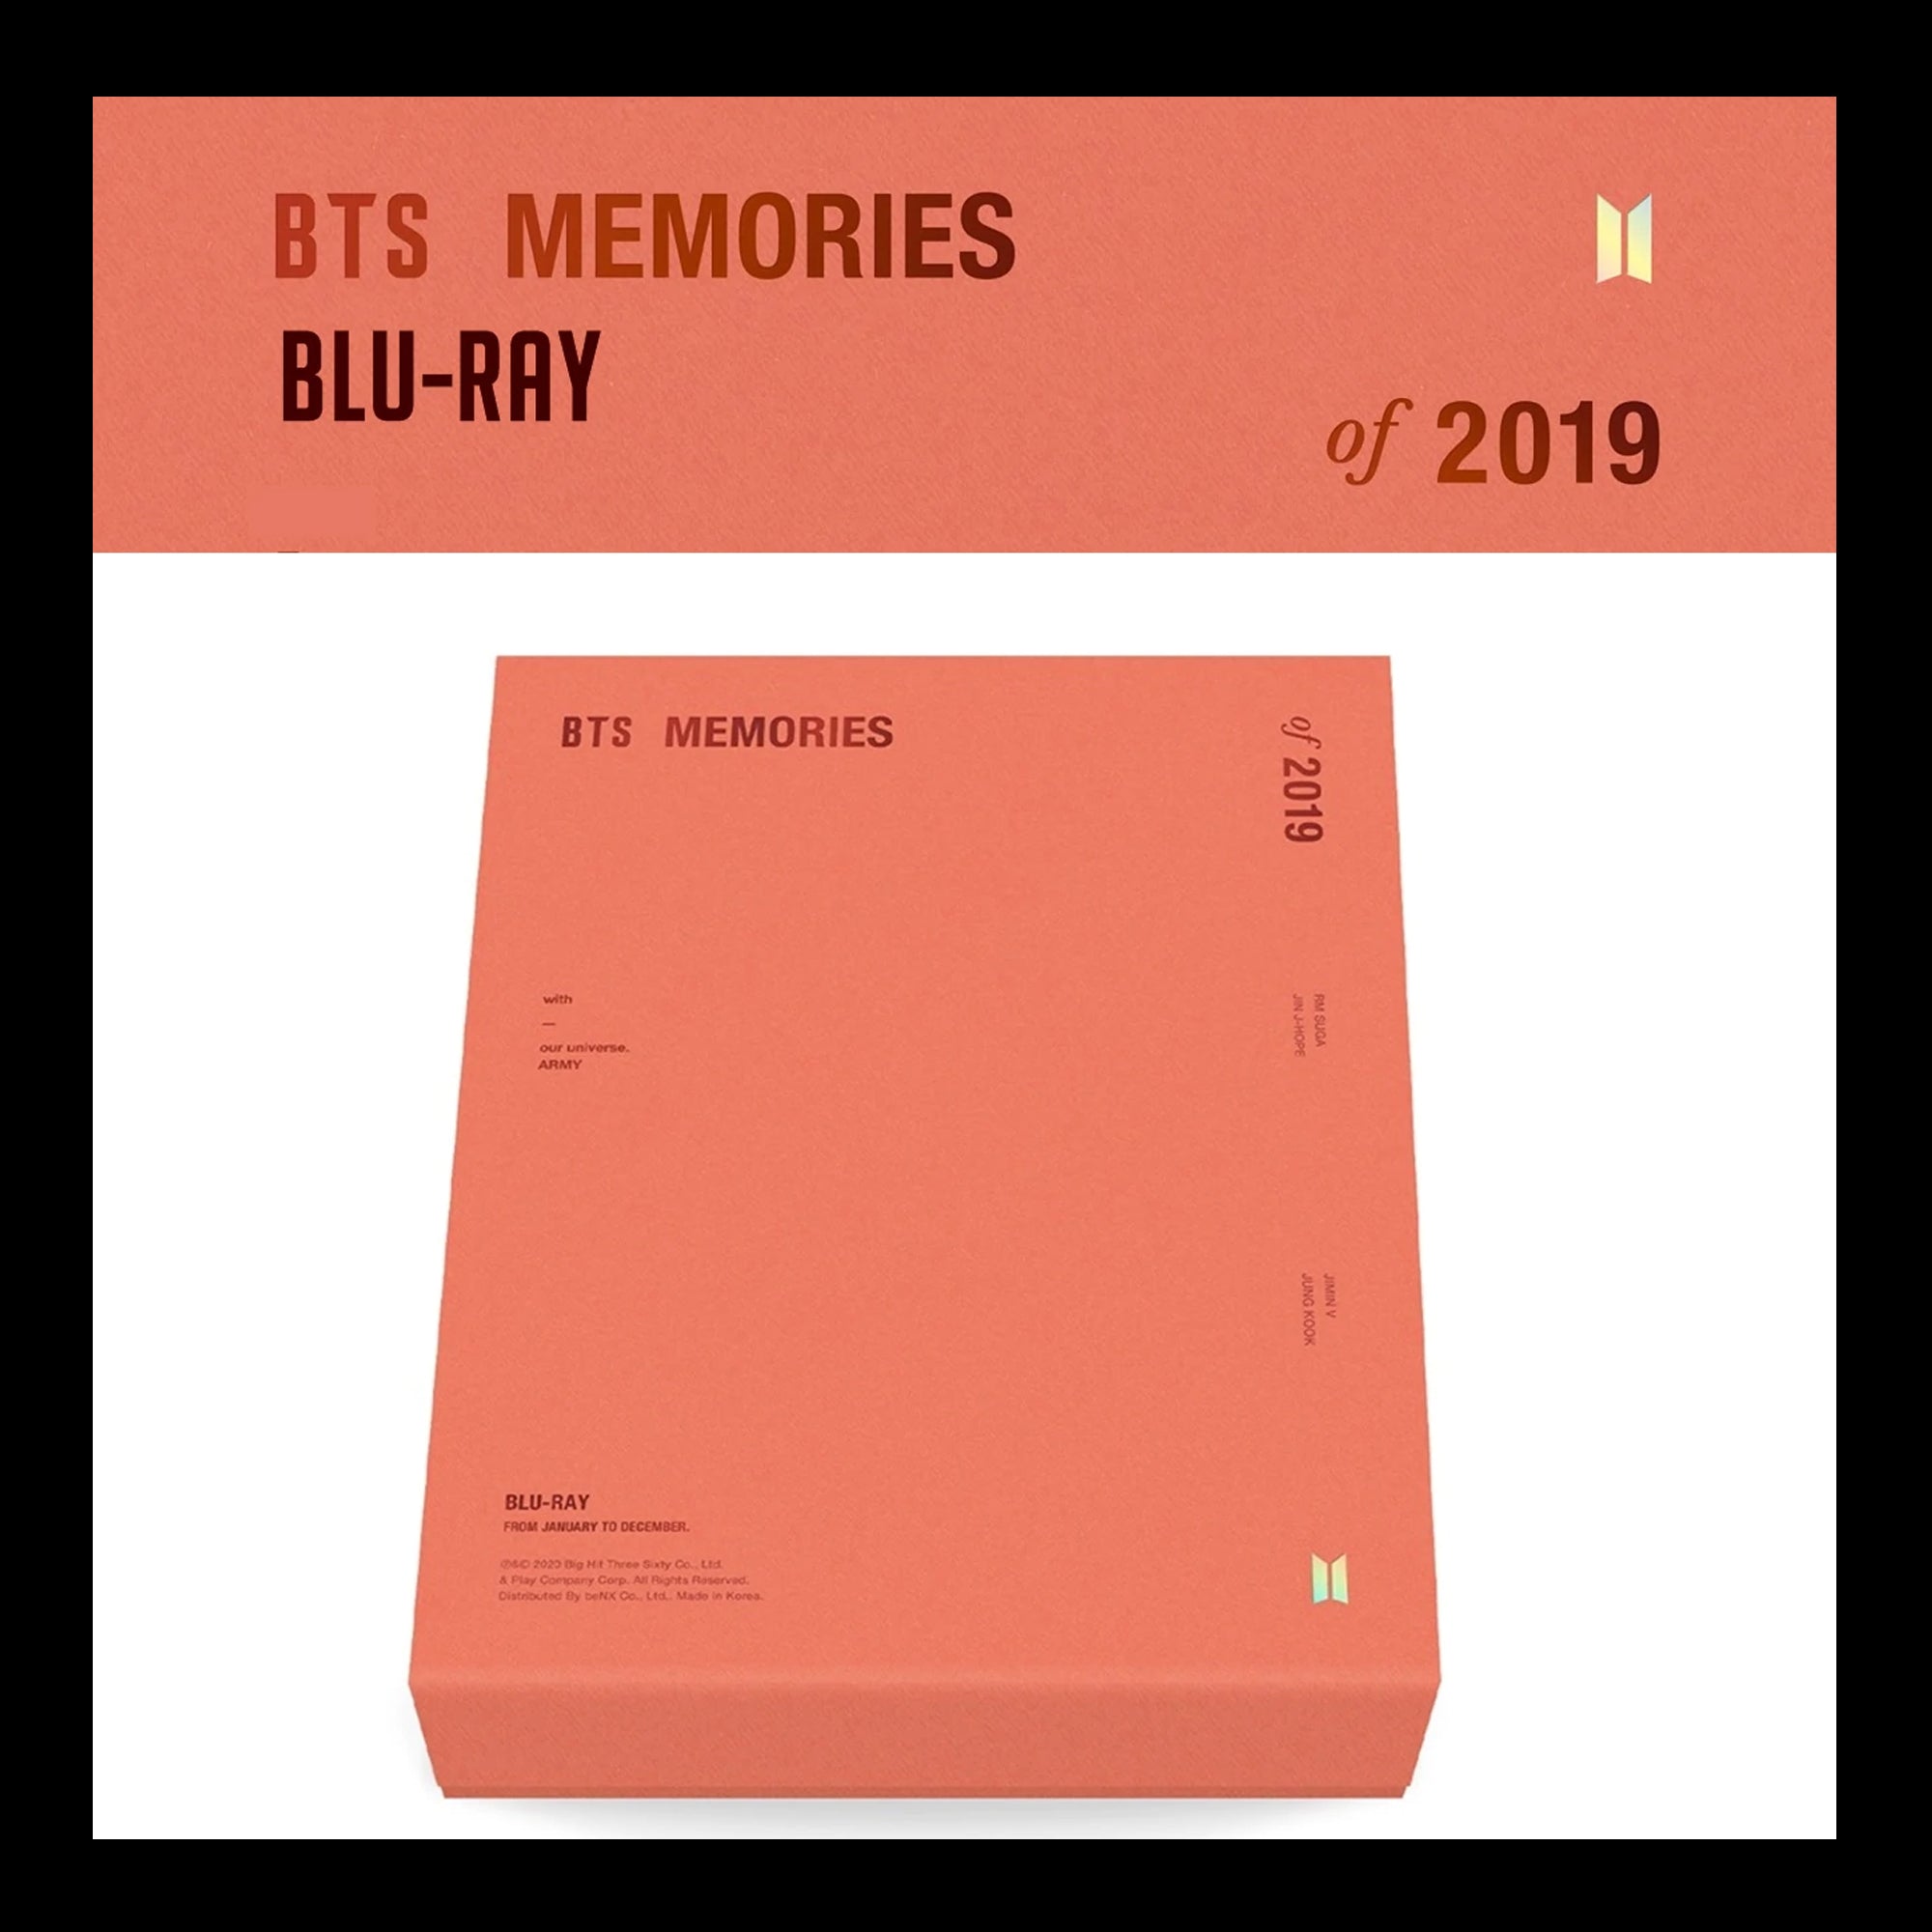 BTS - BTS MEMORIES OF 2019 Blu-Ray